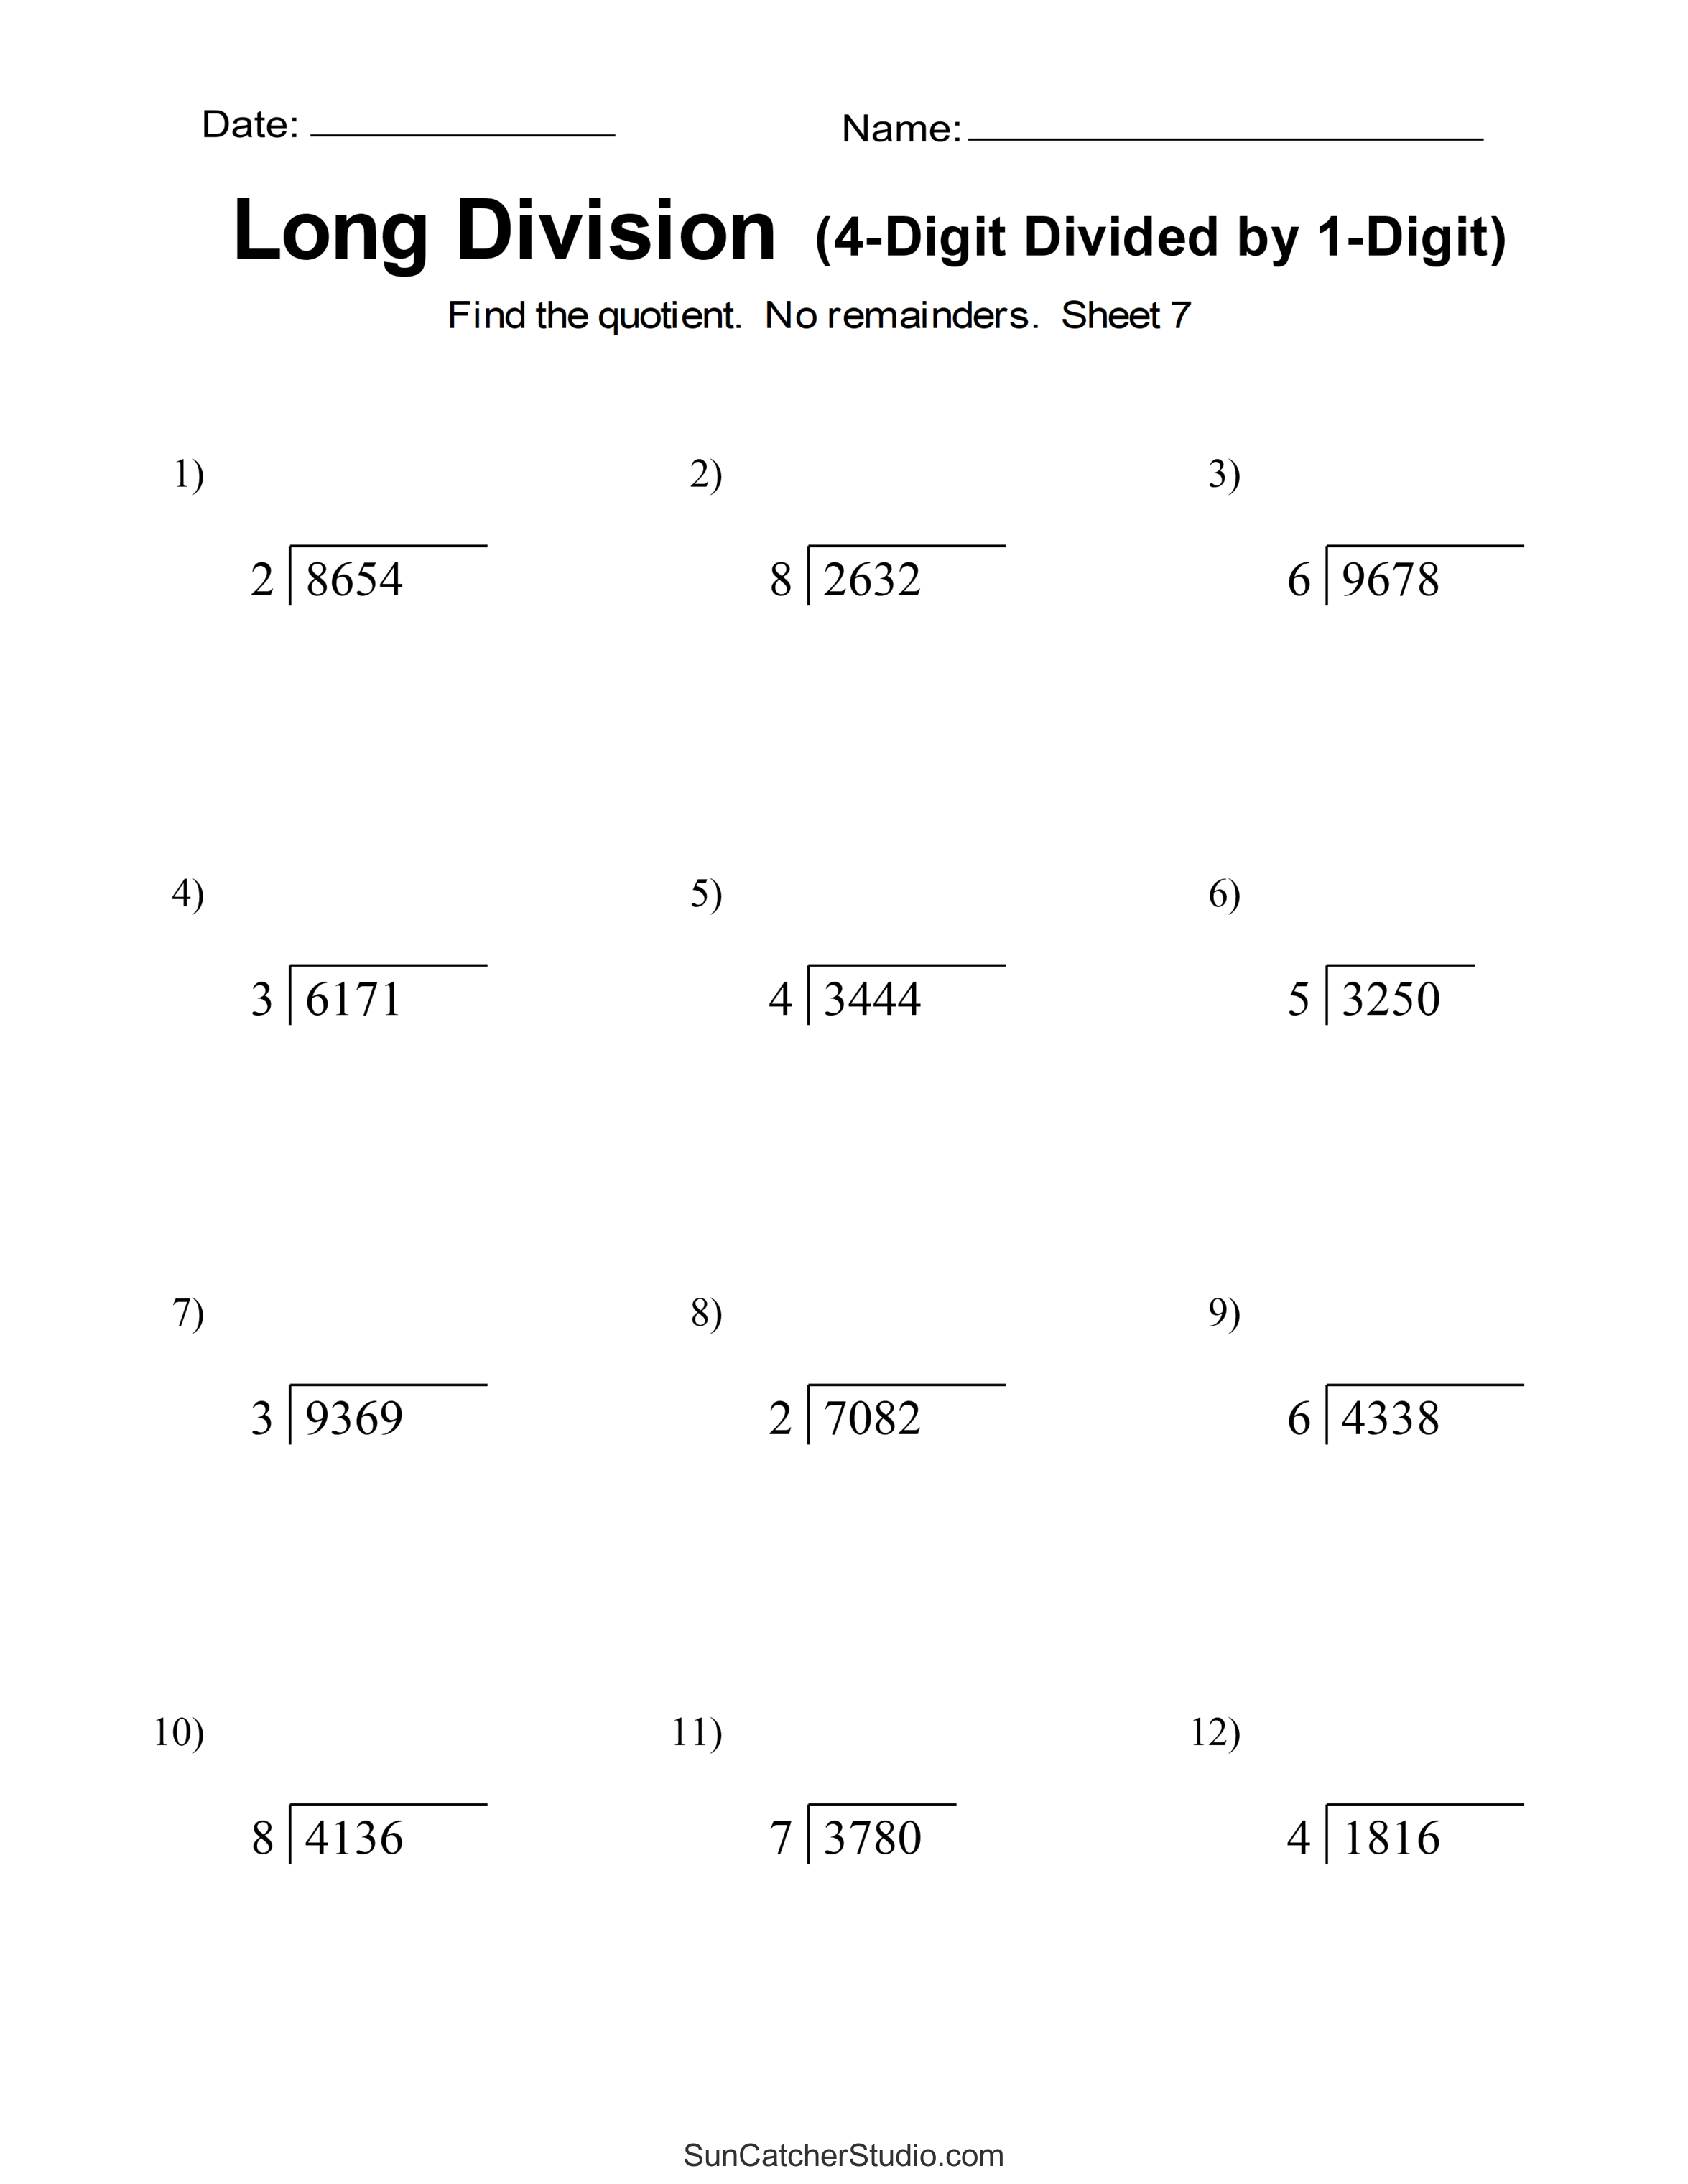 long-division-worksheets-problems-free-printable-math-drills-diy